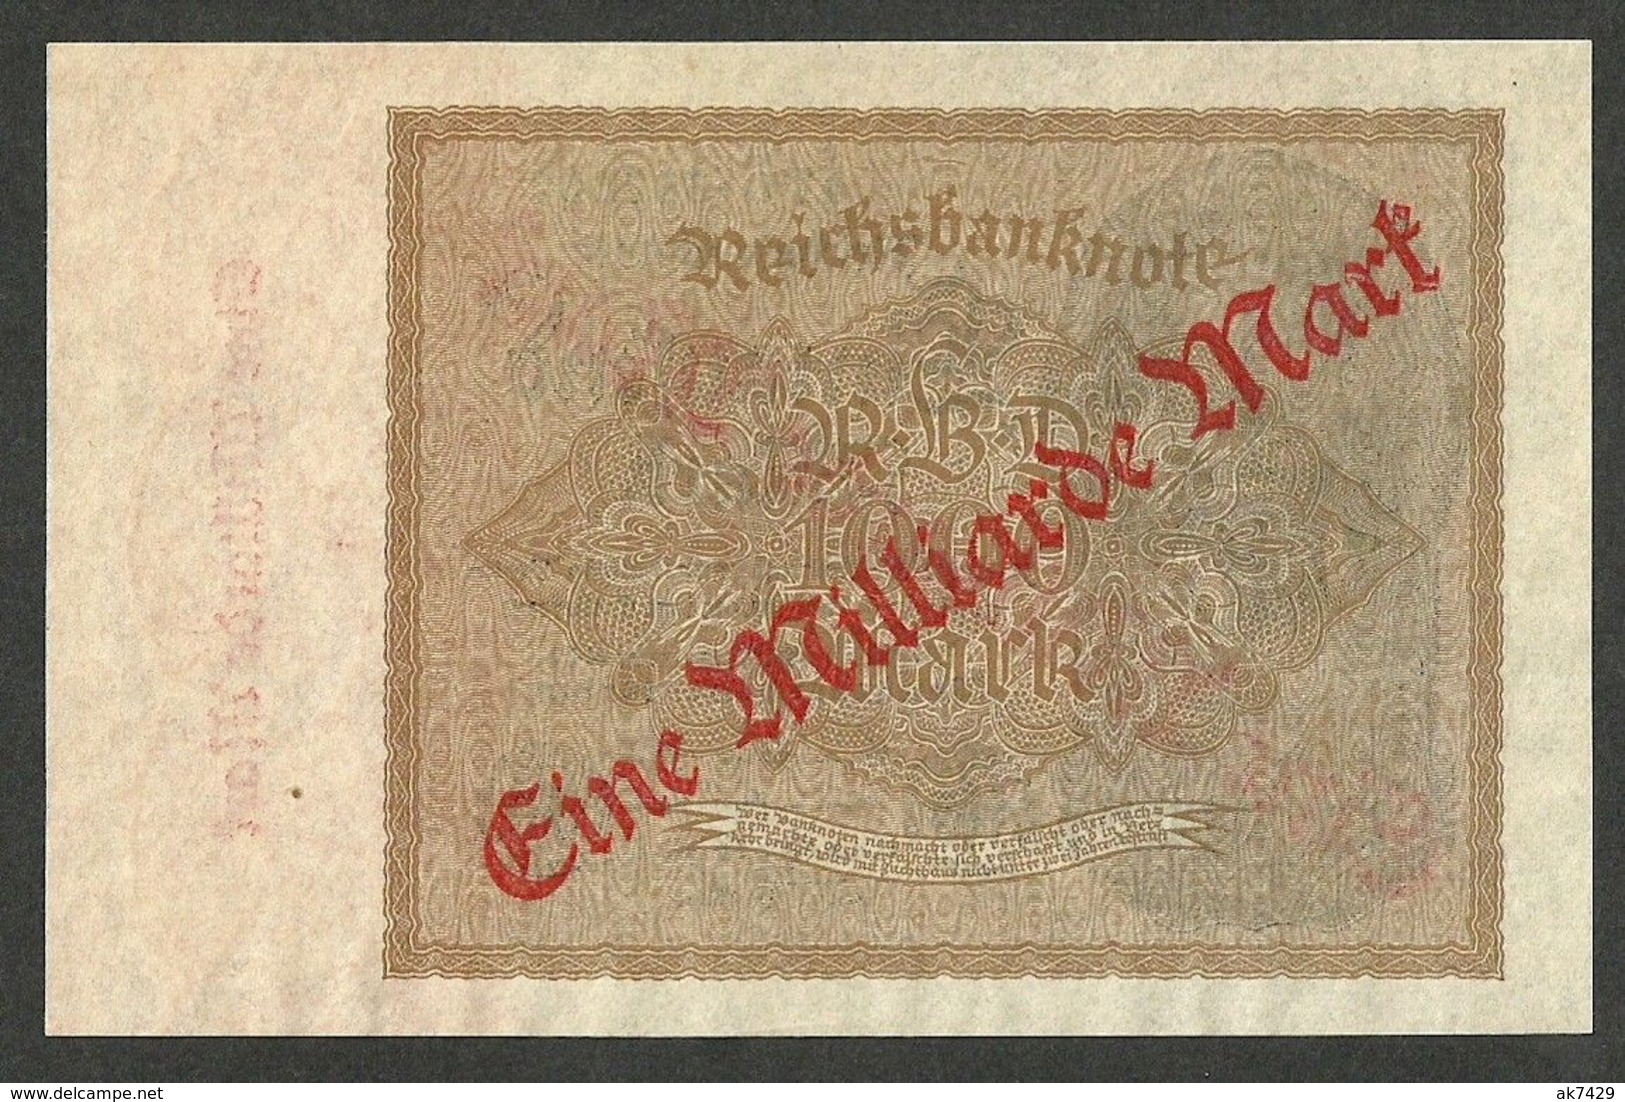 Germany Reichsbanknote 1000 Mark,Overprint 1,000,000,000 Mark 1923 Old 1922 UNC P-113a - 1000 Reichsmark